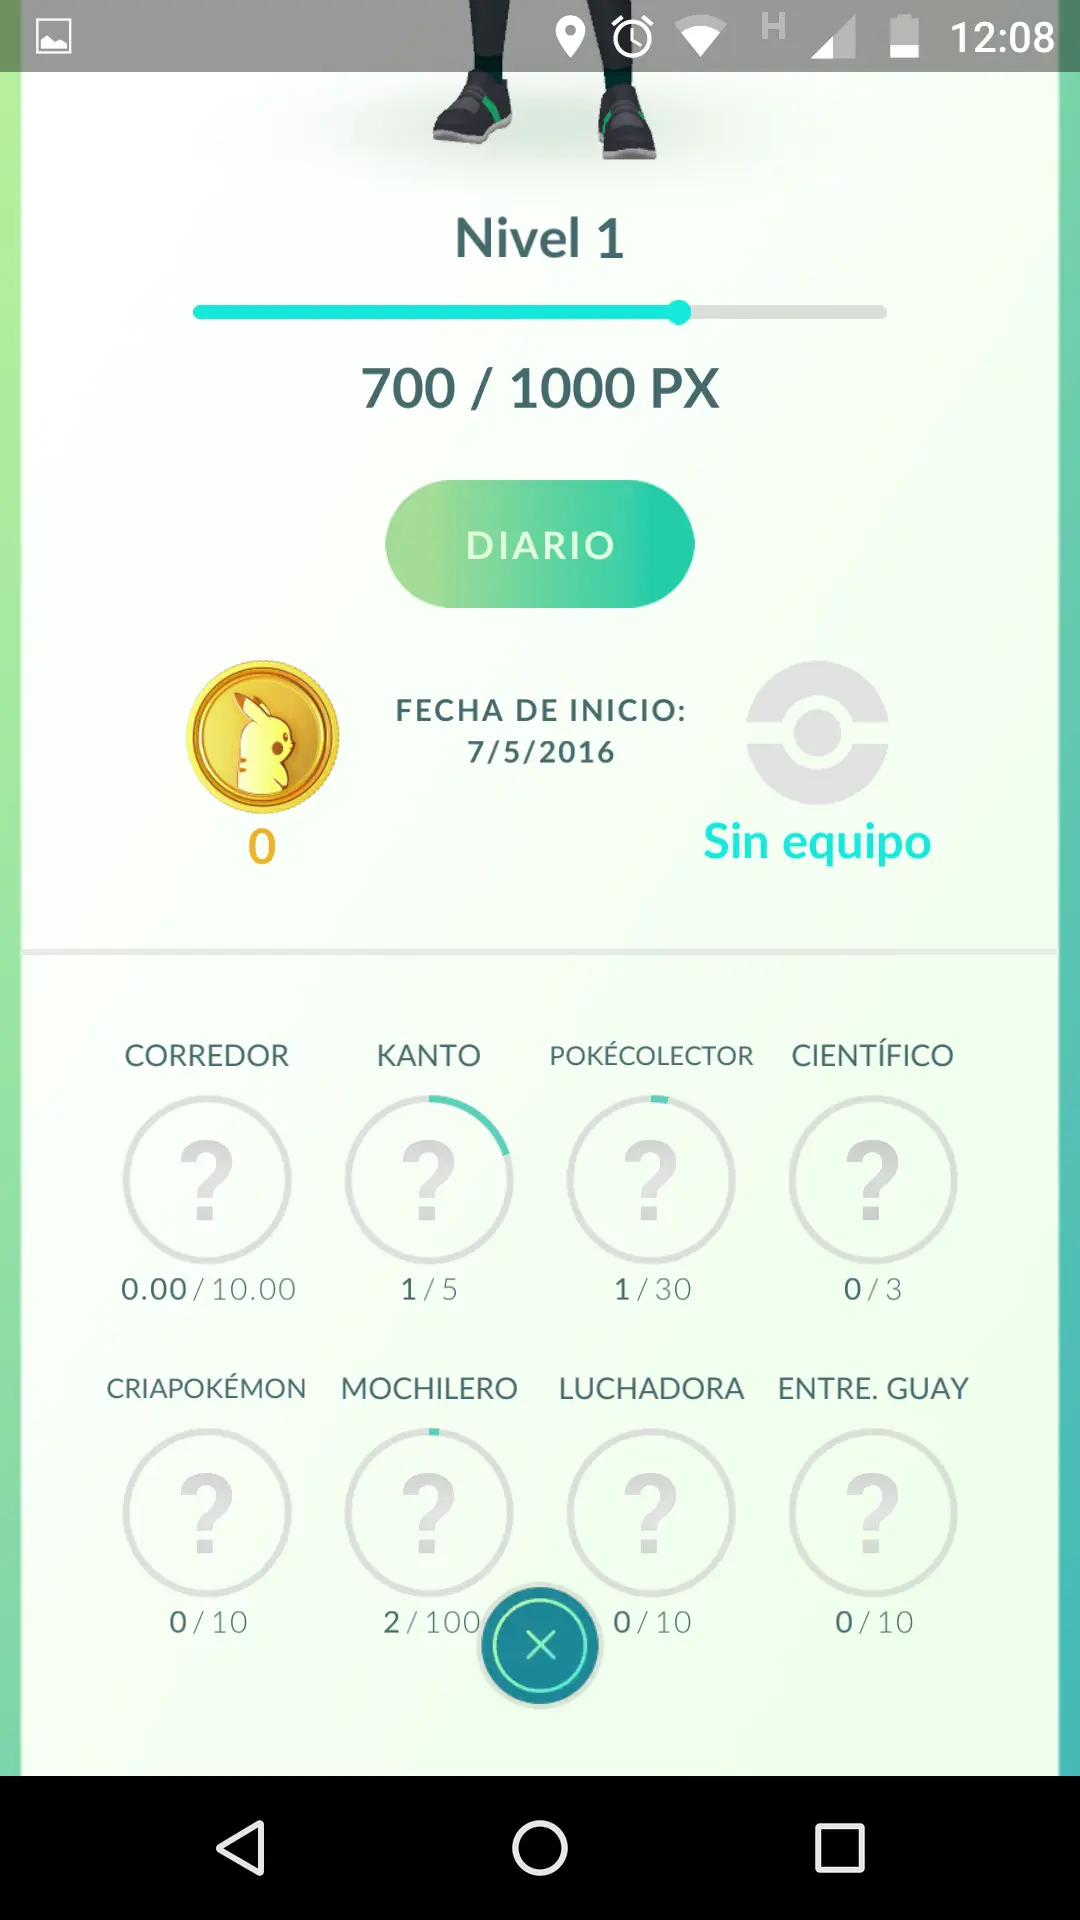 Descarga Pokemon Go disponible Android Mexico Latam (9)